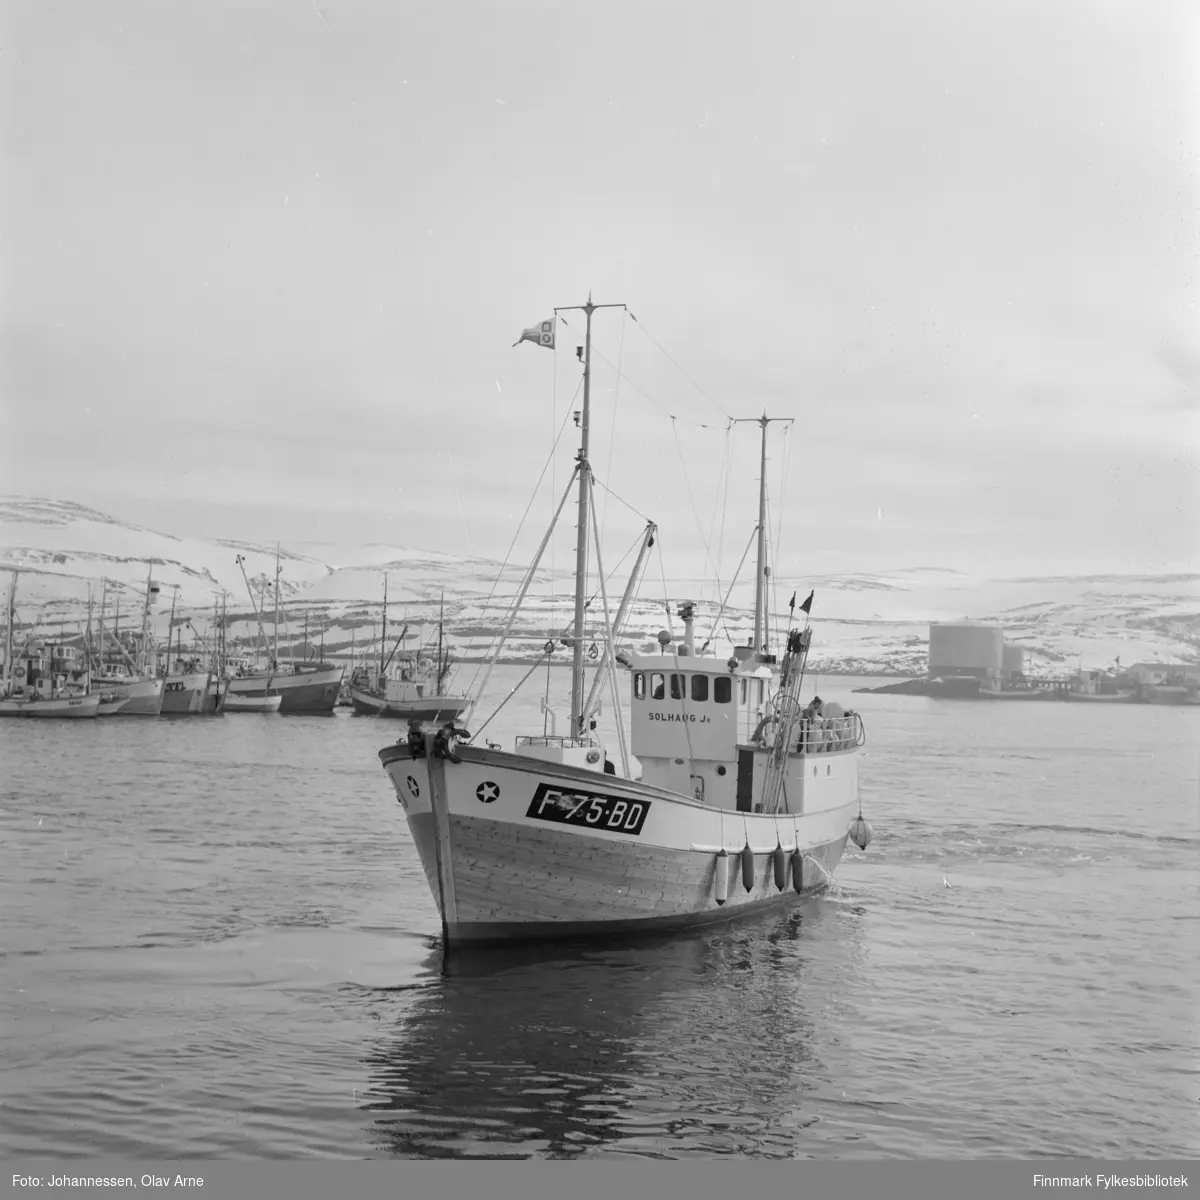 Påskrift: Bilde visre nybåten M/K "Solhaug Jr." på havna i Båtsfjord 

Båten har nummer F-75-BD malt på siden 